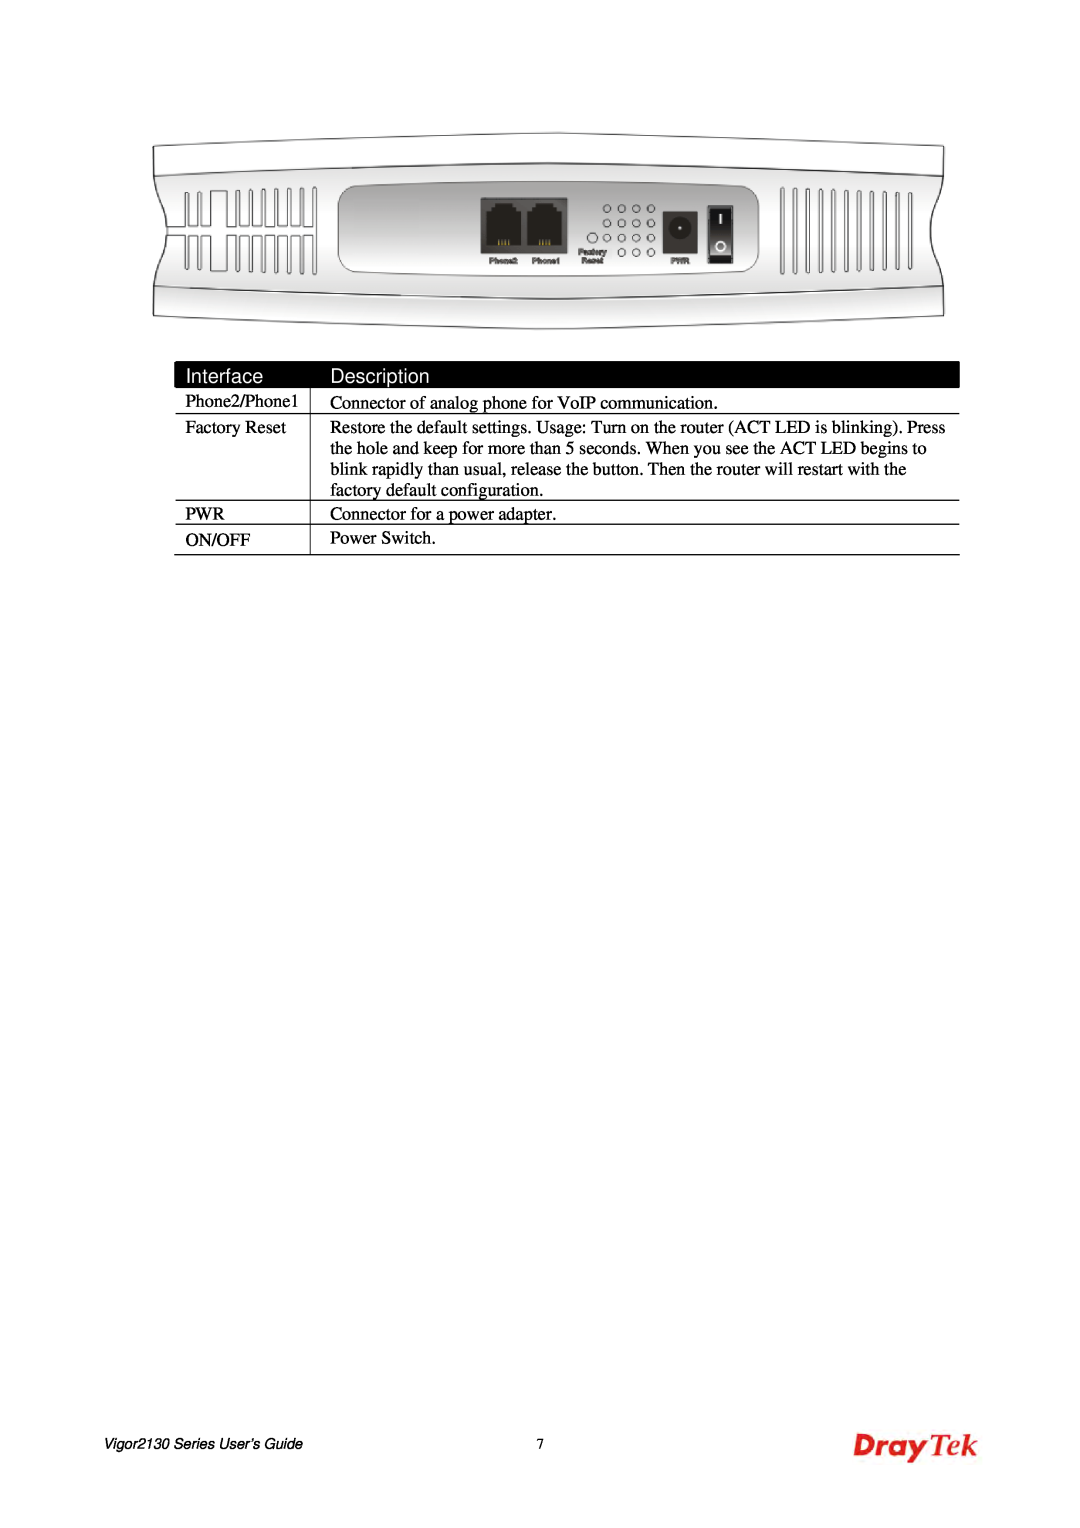 Draytek 2130 manual Interface, Description 